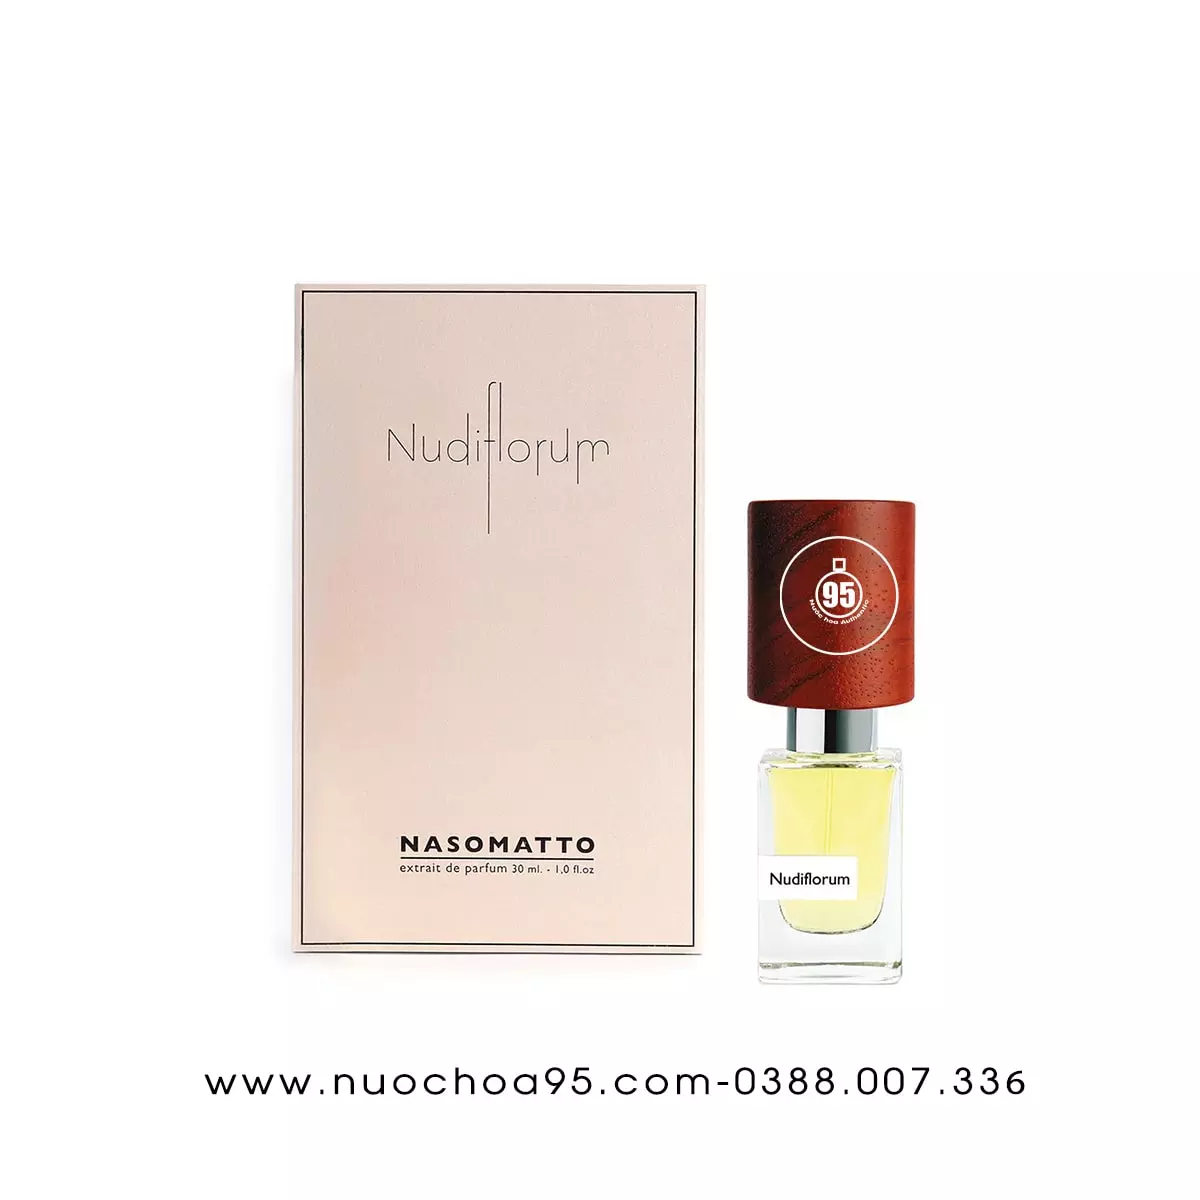 Nước hoa Nasomatto Nudiflorum